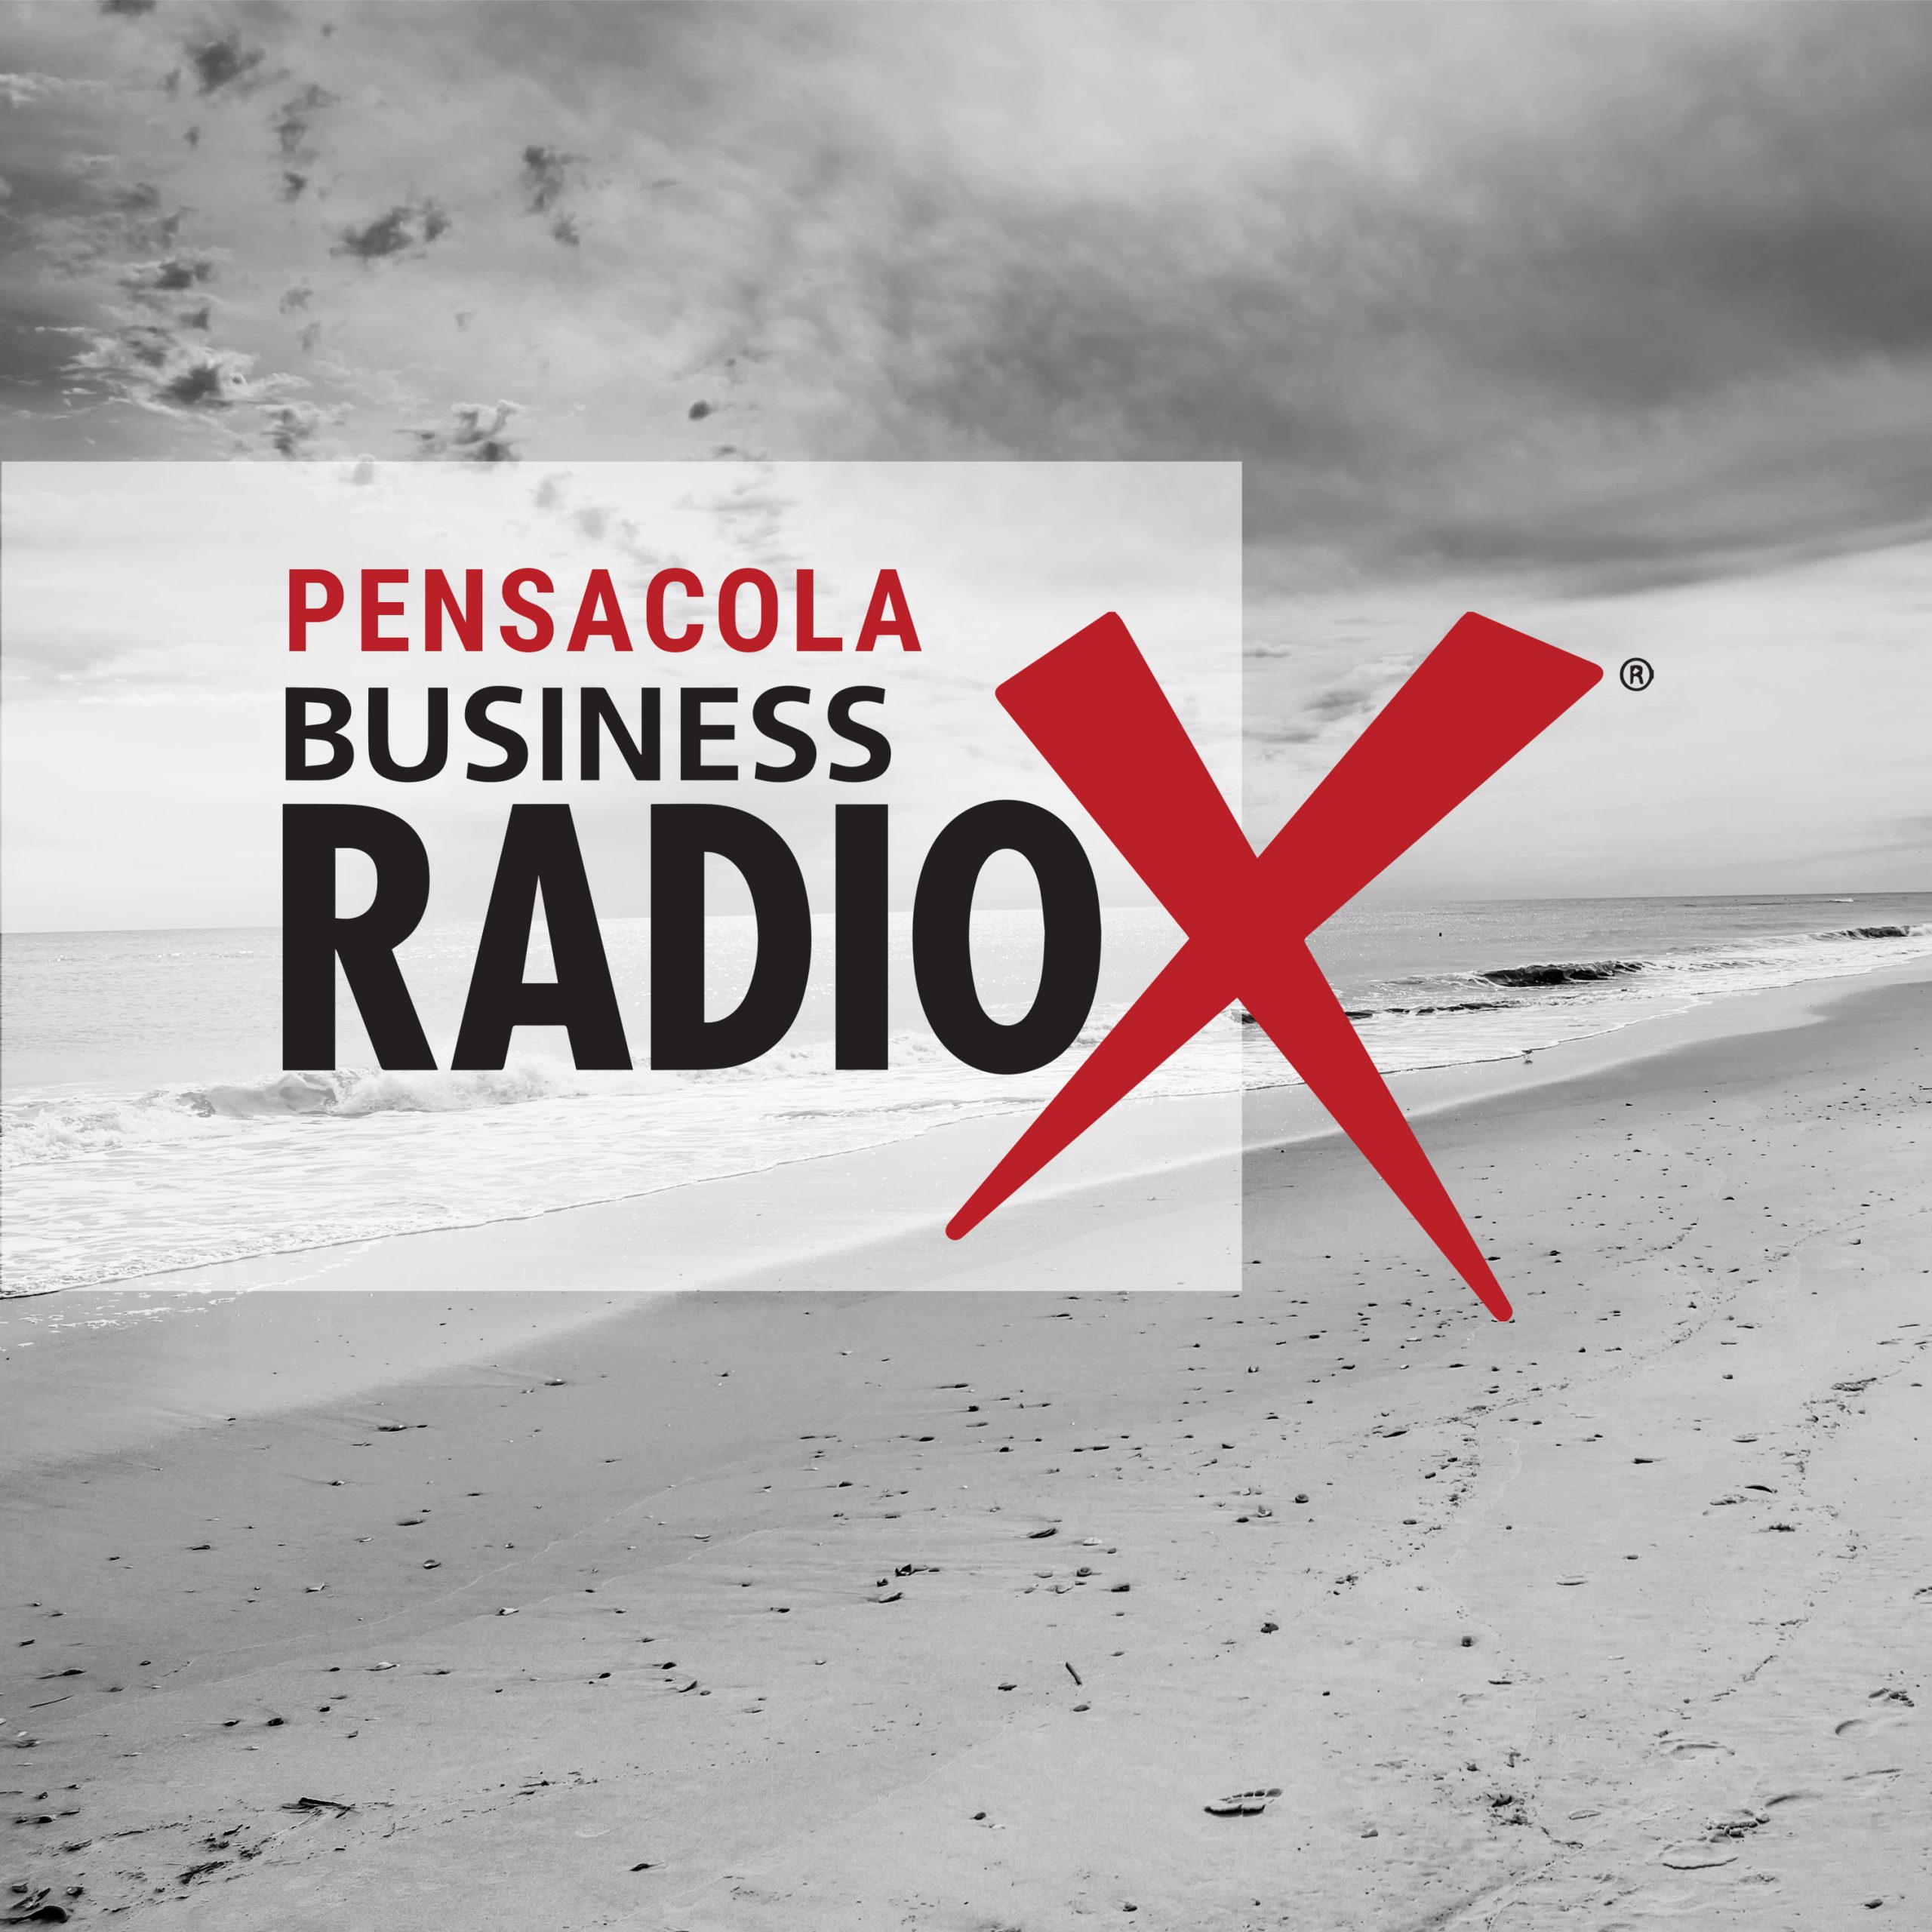 Pensacola Business Radio 10.02.15 – Guests: Beej Davis with USO, Dana Cervantes Richardson with USO, Tim Ekelund with The Agency, Erin Wilmer with Edward Jones